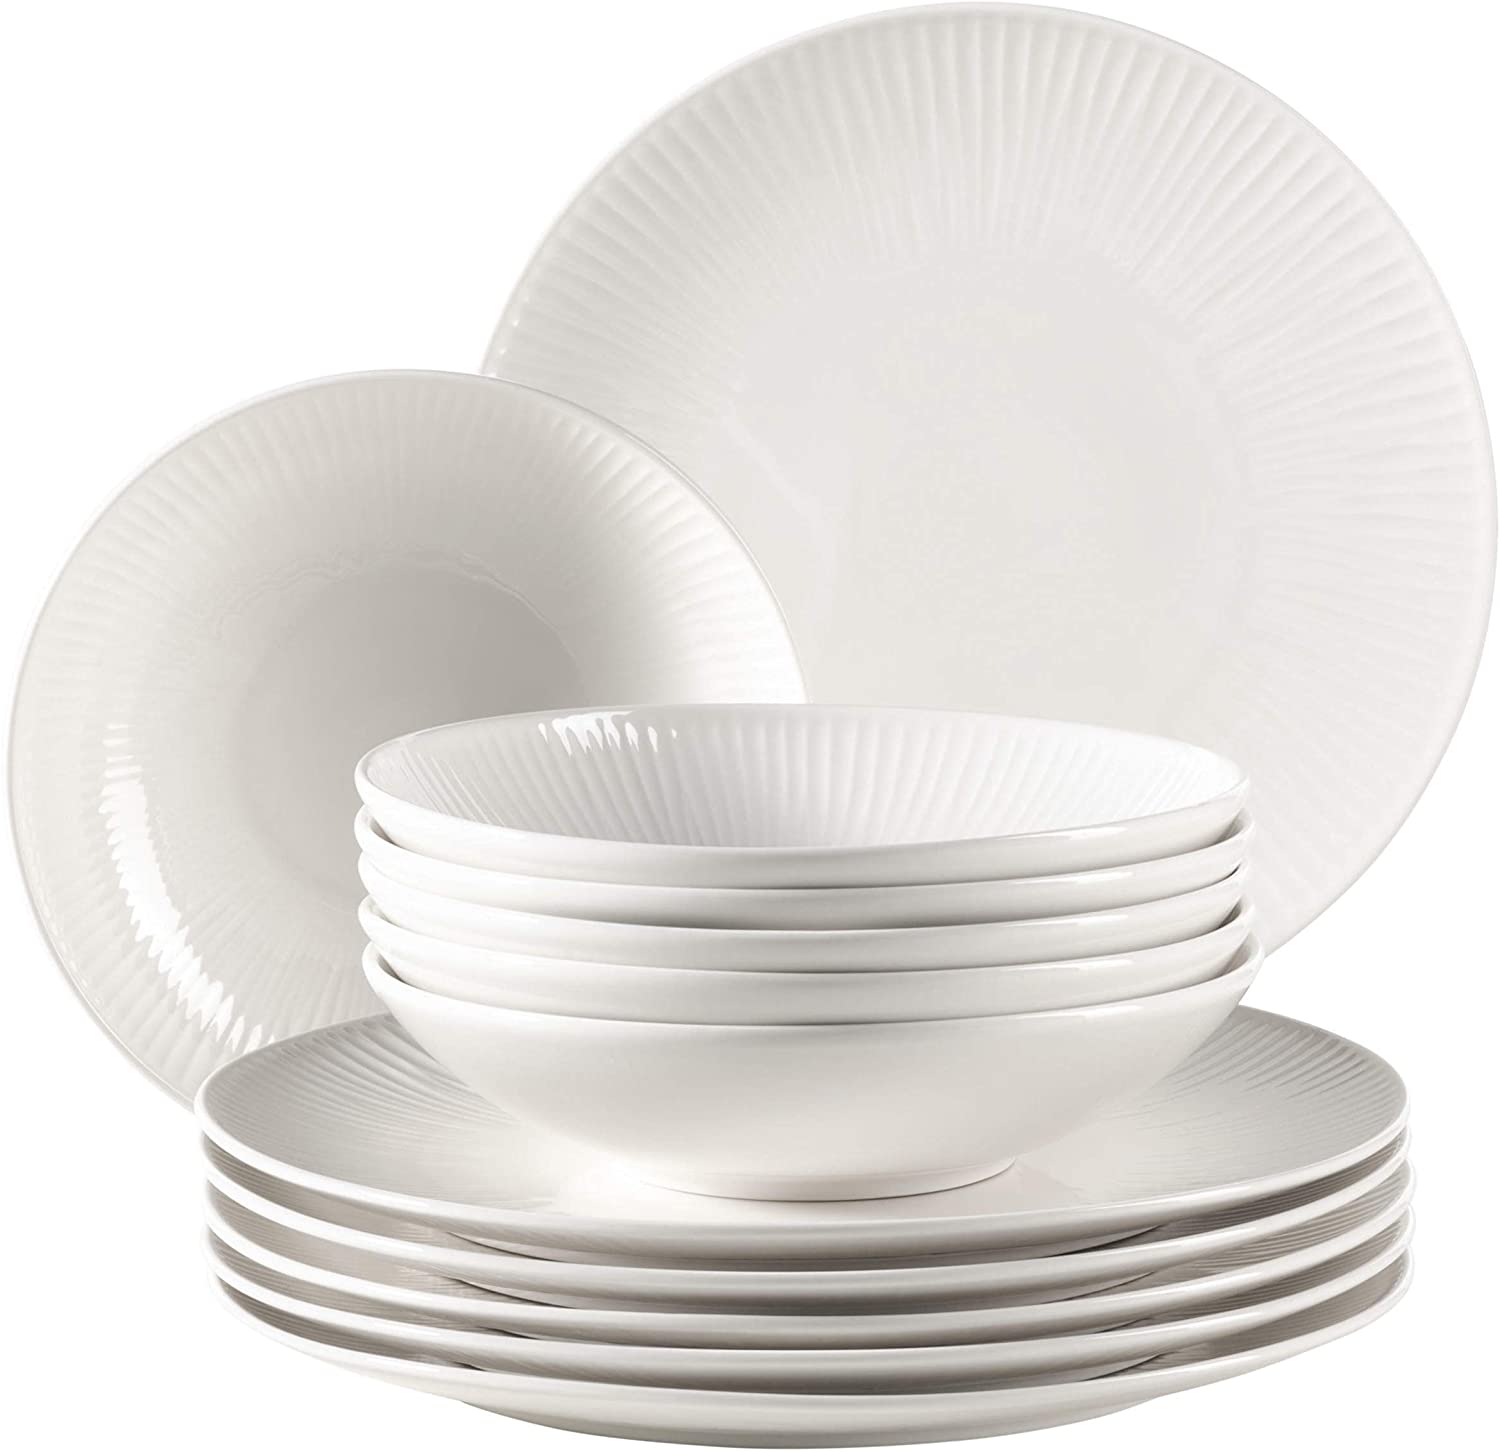 Maser MÄSER 931461 Dalia Dinner Service for 6 People Made of High-Quality Hotel Porcelain in White, 12-Piece Plate Set in Vintage Design, Durable Porcelain